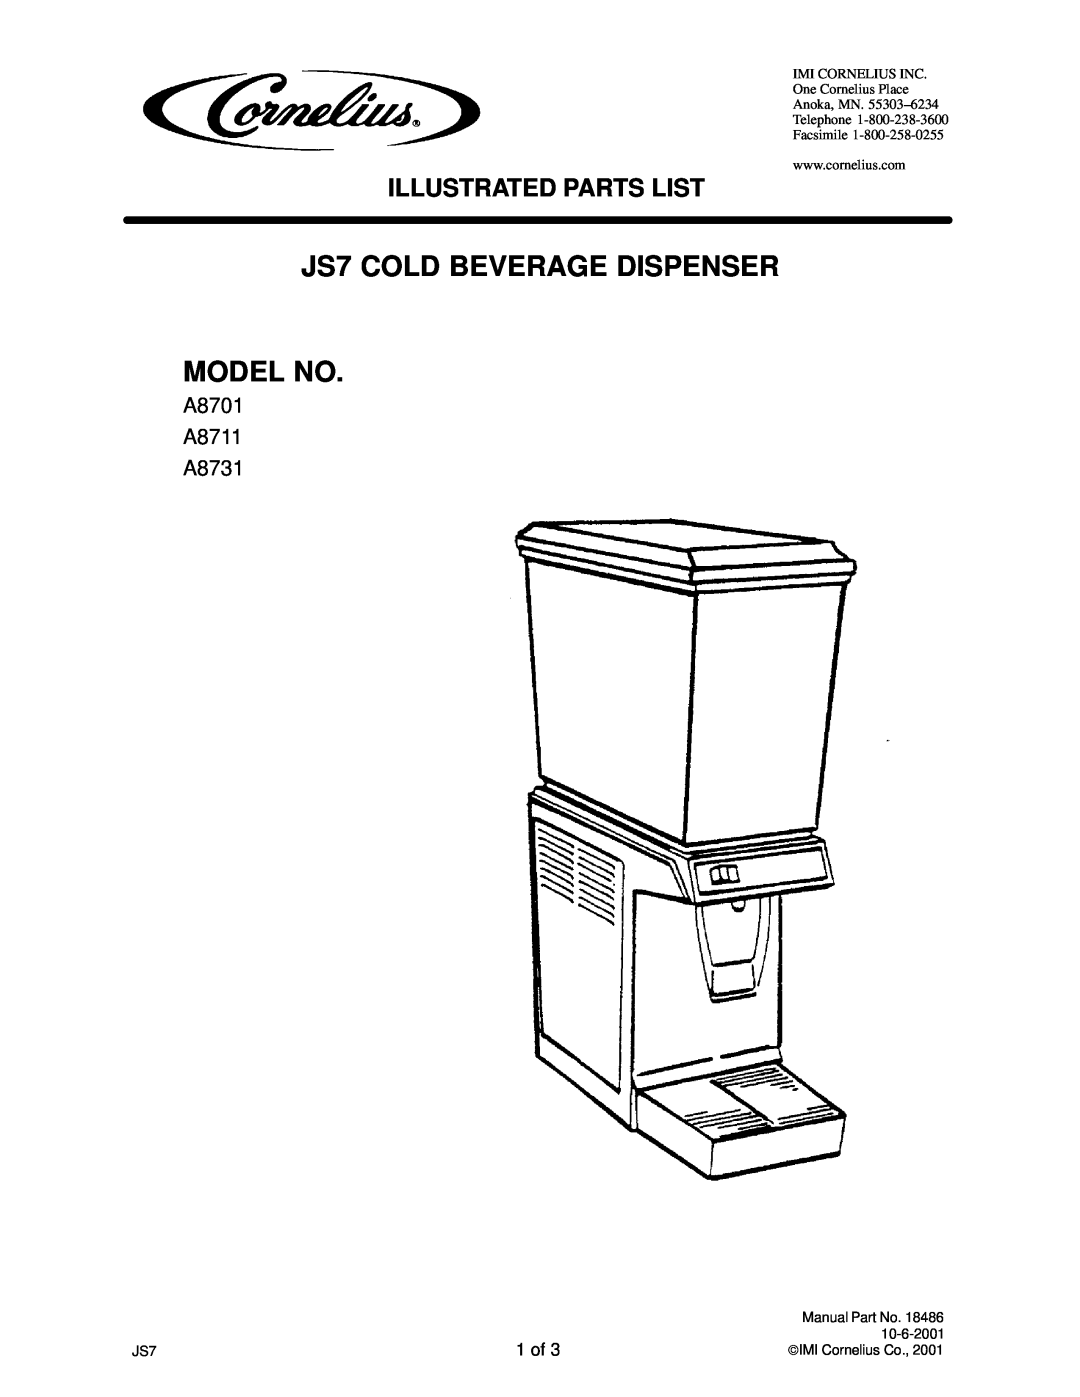 Panasonic manual JS7 COLD BEVERAGE DISPENSER MODEL NO, Illustrated Parts List, 1 of, A8701 A8711 A8731 